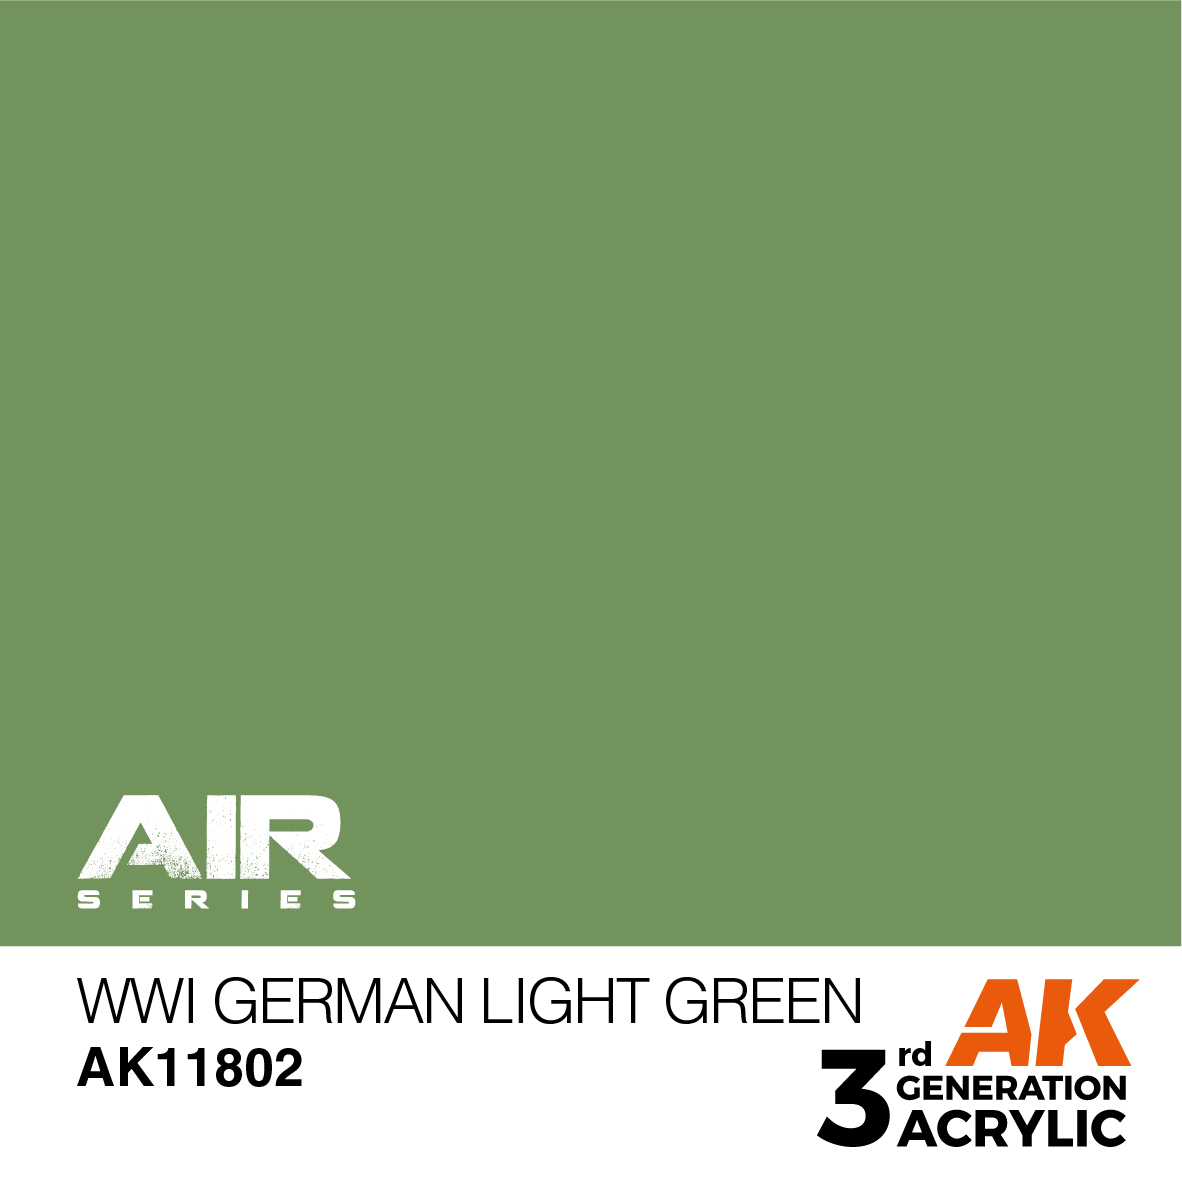 WWI German Light Green – AIR